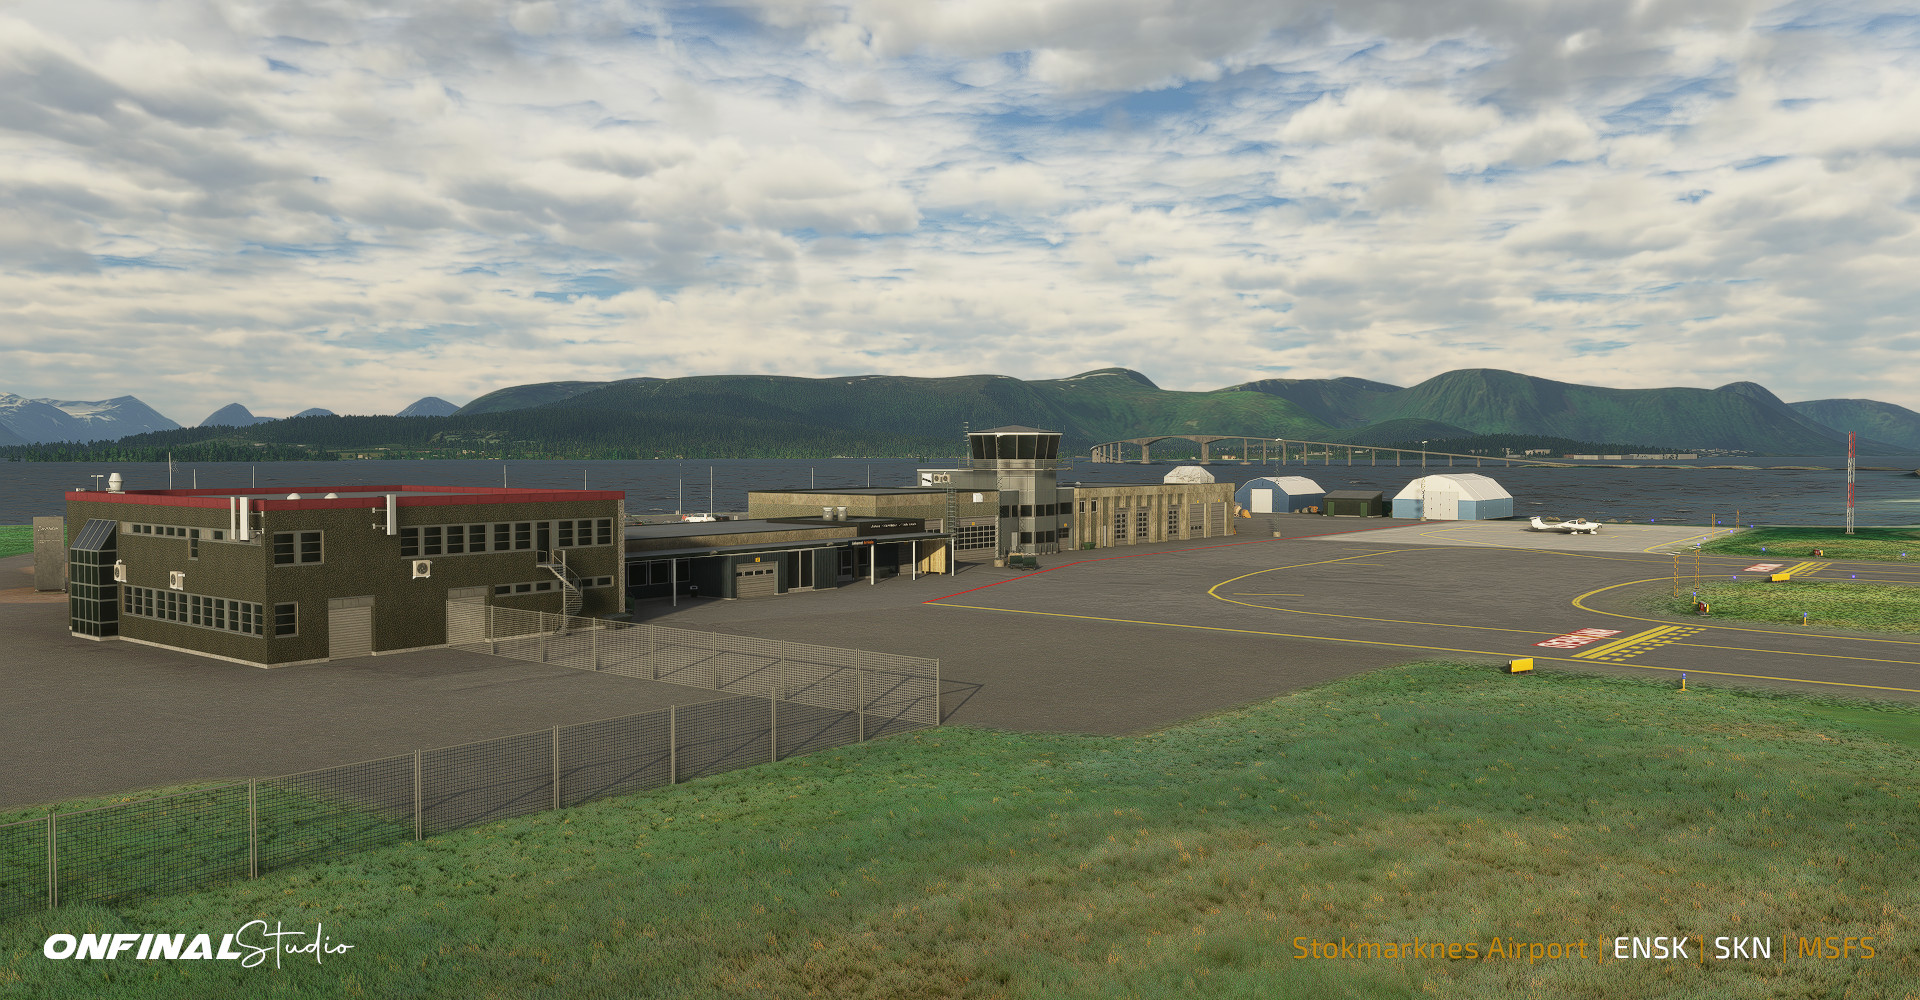 Stokmarknes Airport ENSK Scenery MSFS 2020 P3D Prepar3d